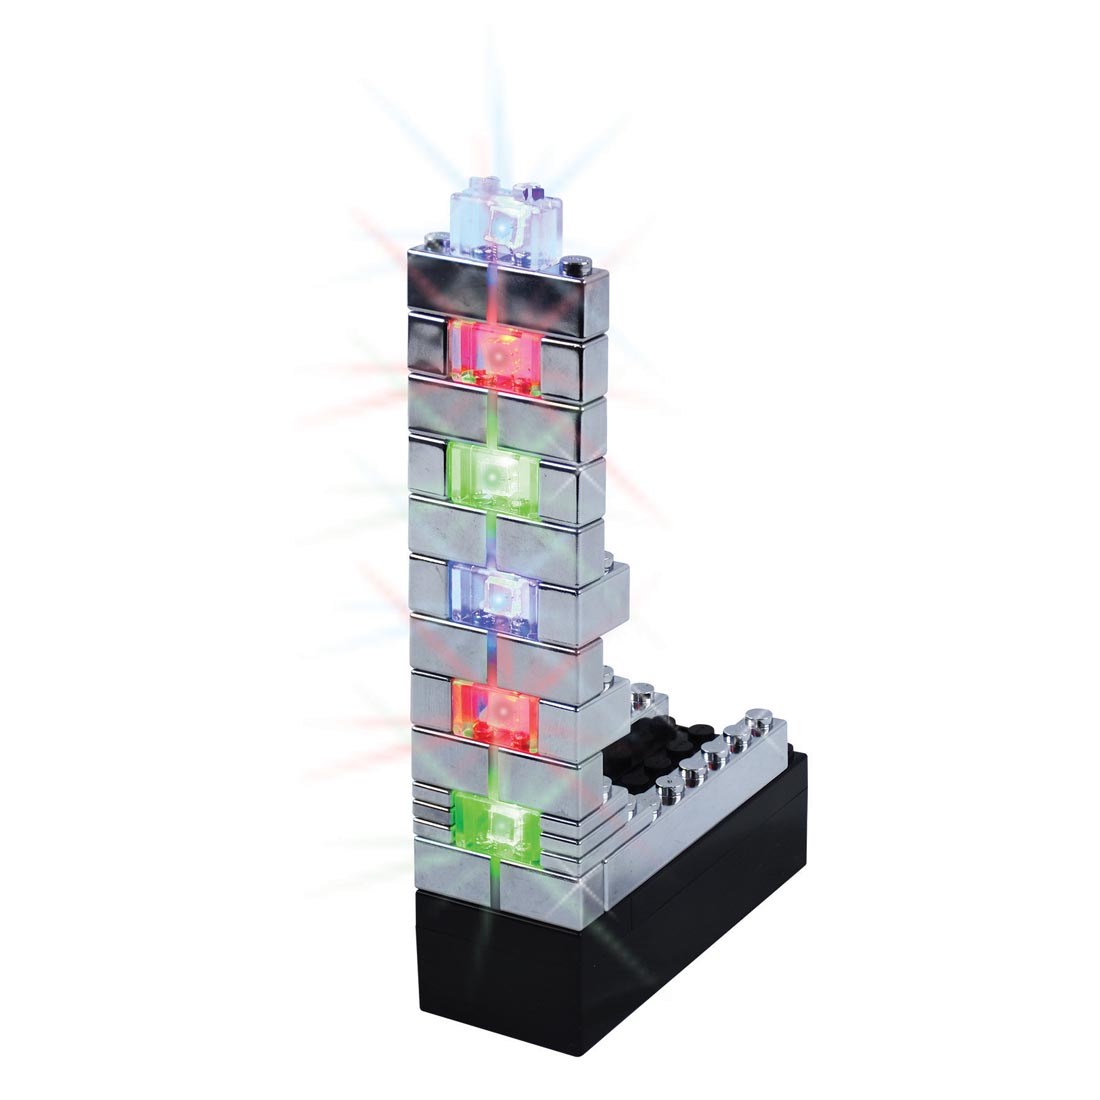 Light-Up Tower made with the E-Blox Power Blox Starter Set